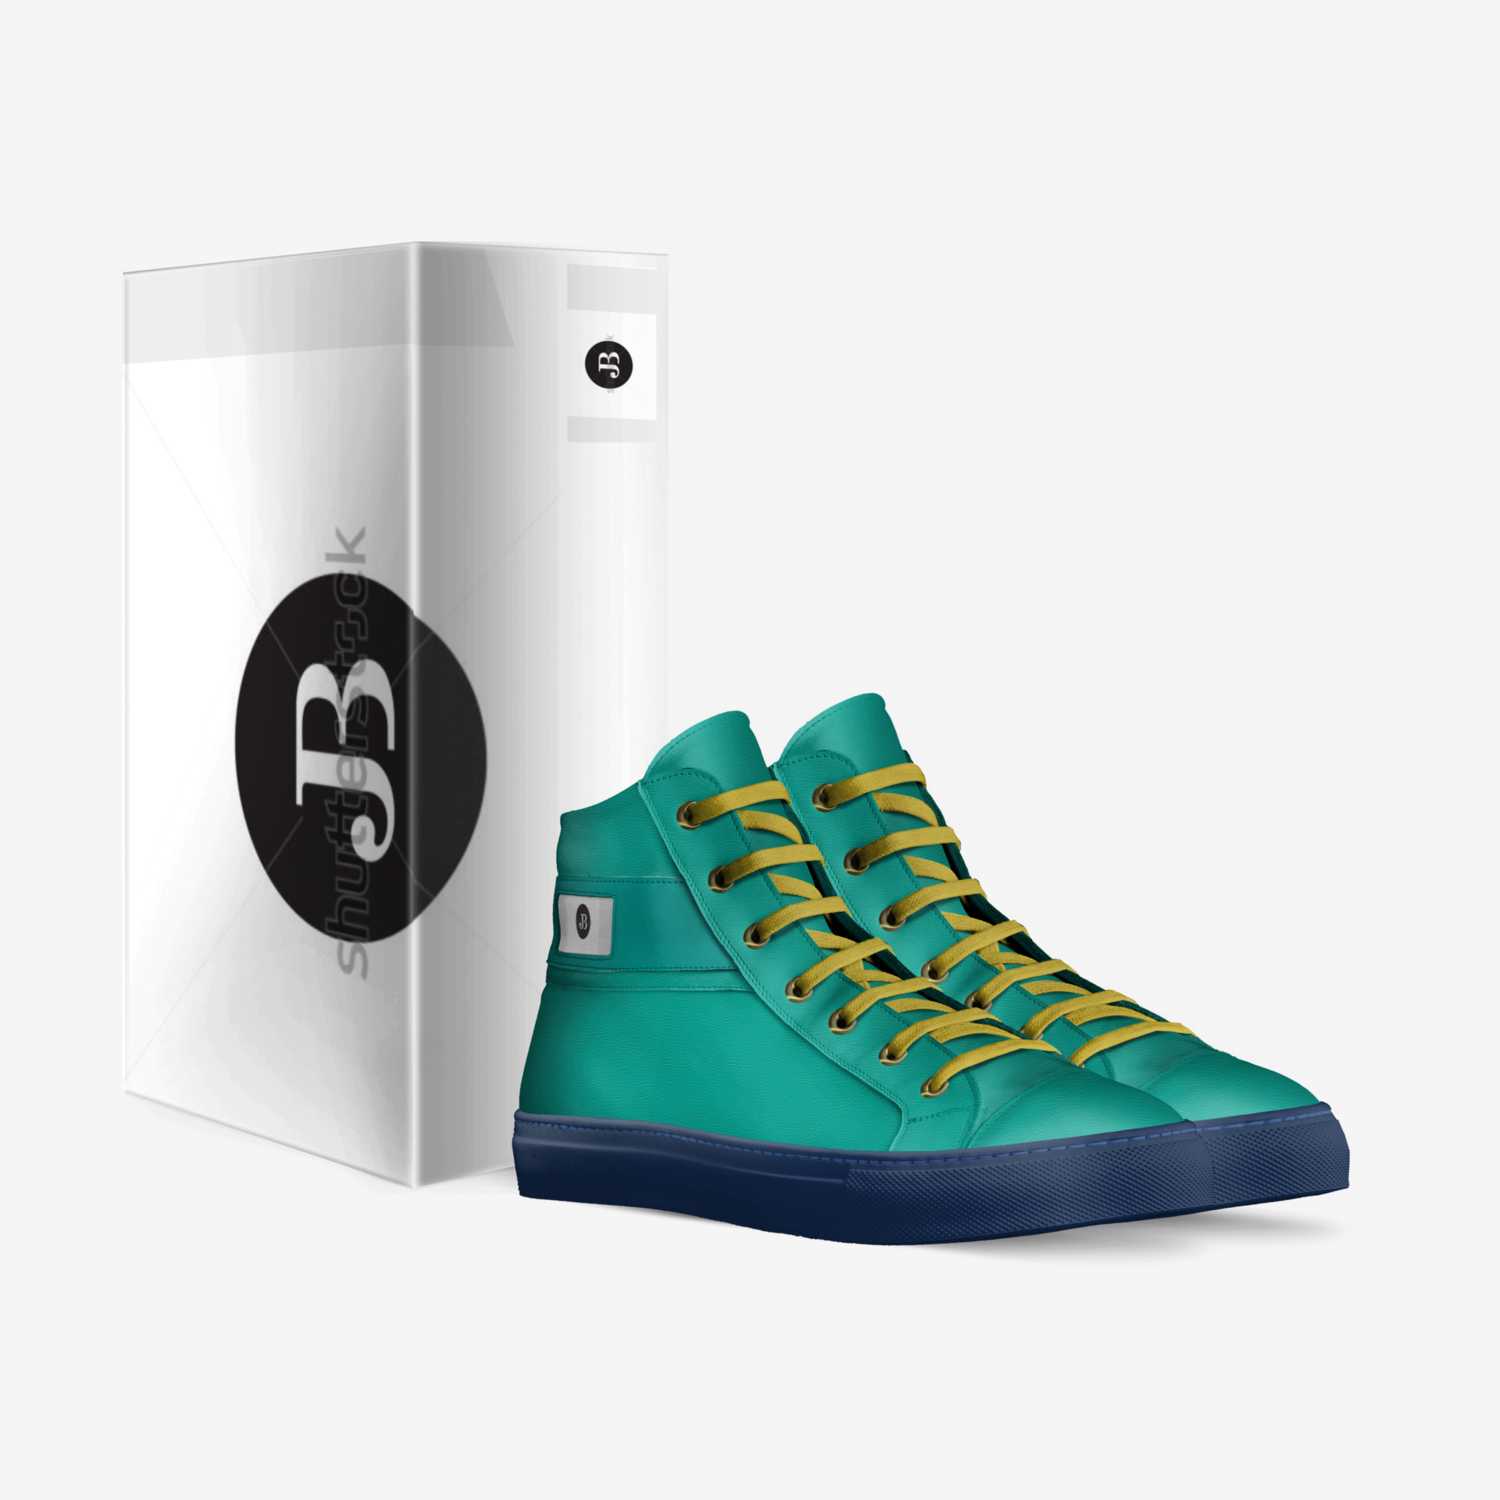 Buchanan's custom made in Italy shoes by Justin Buchanan | Box view